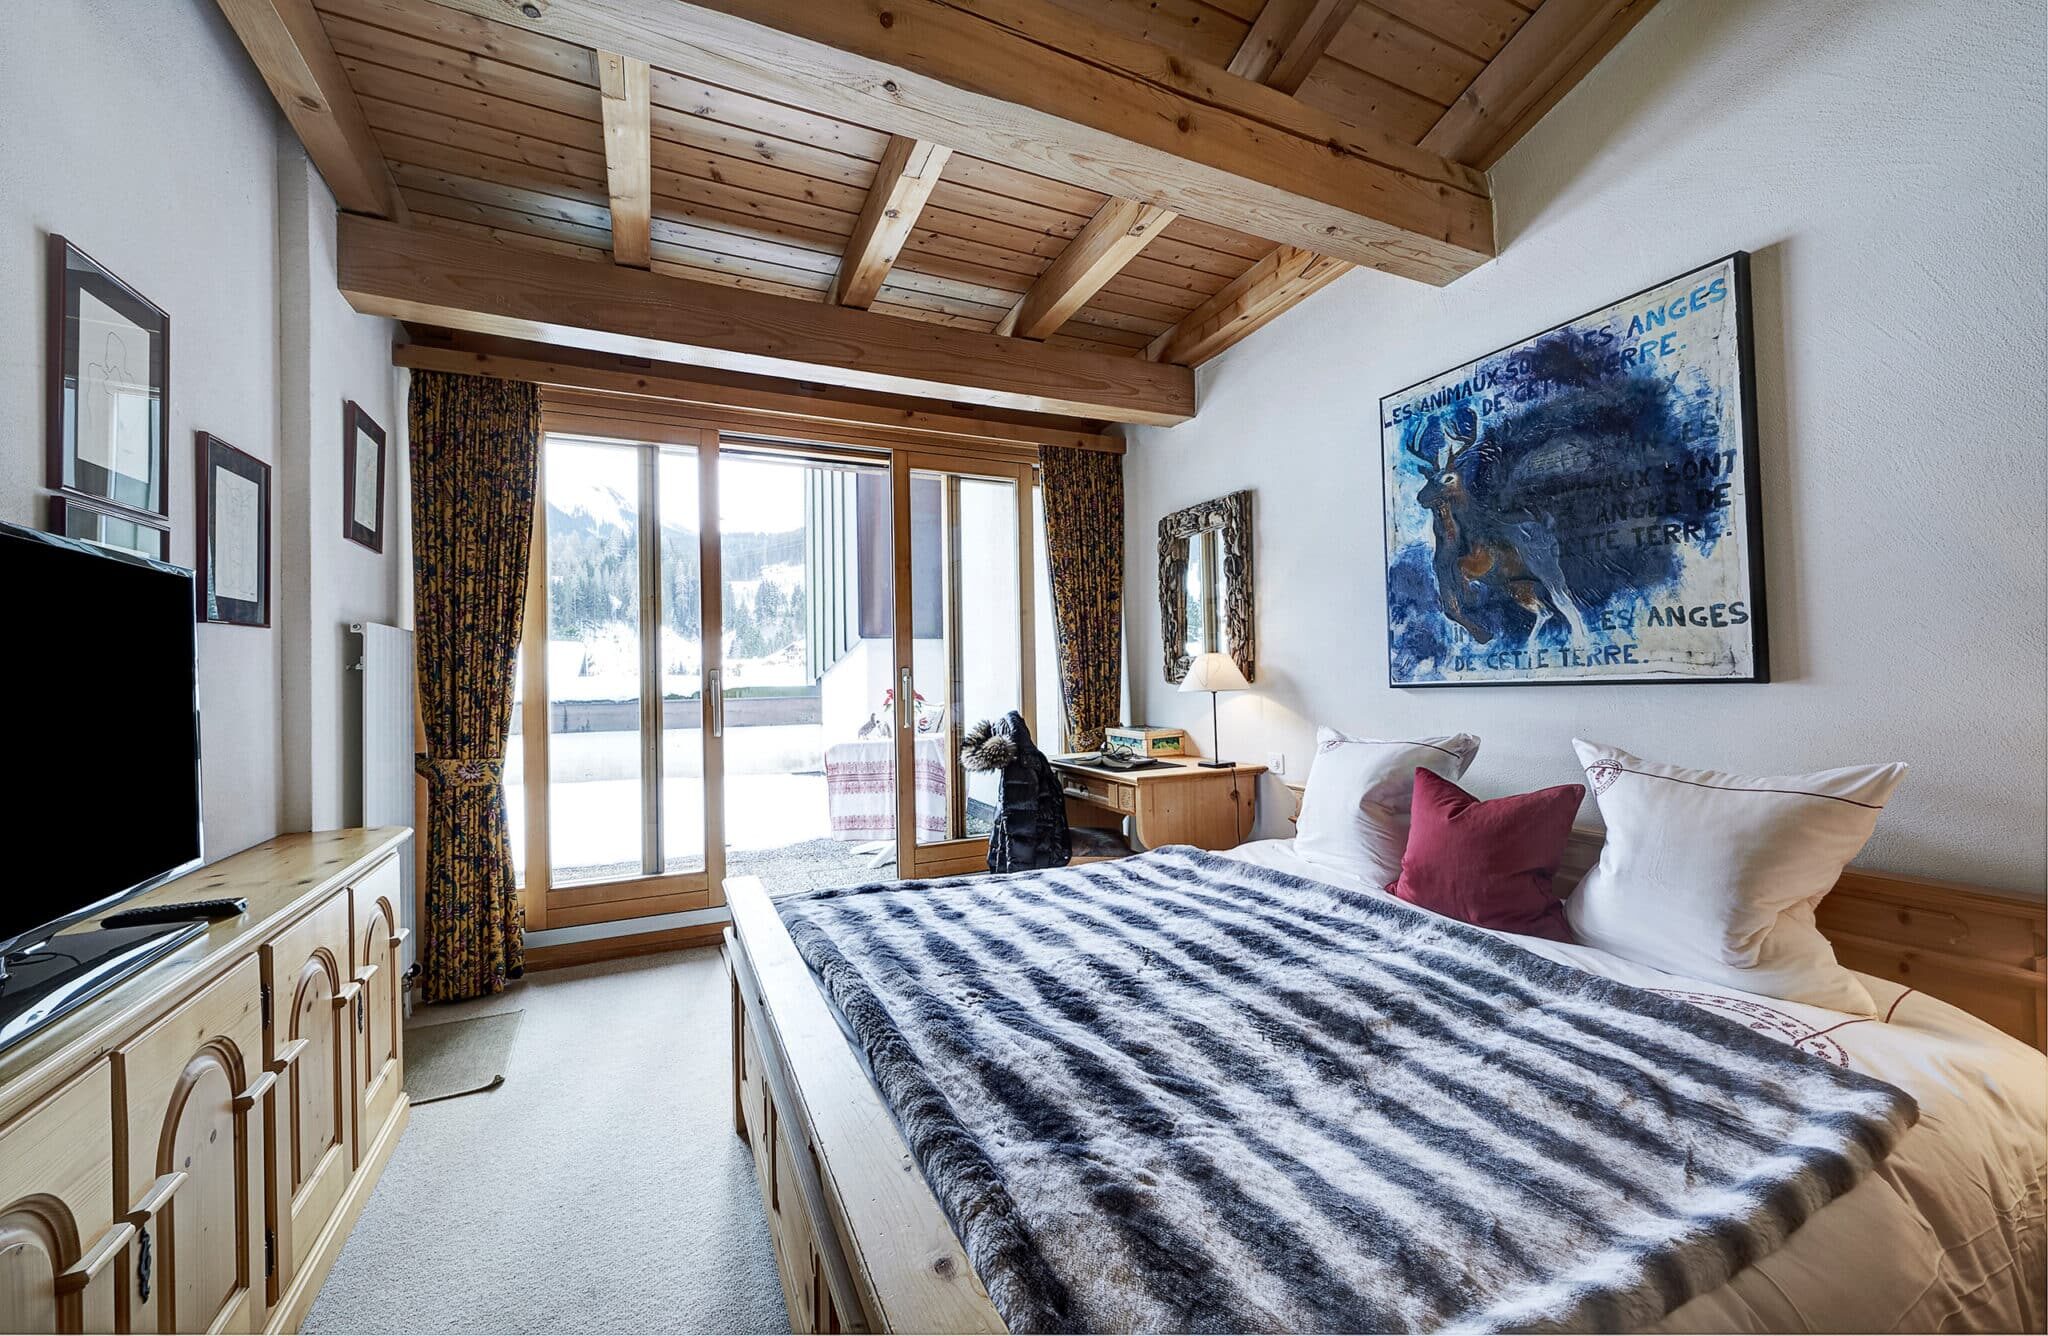 Ski apartment rental in Klosters, Switzerland.